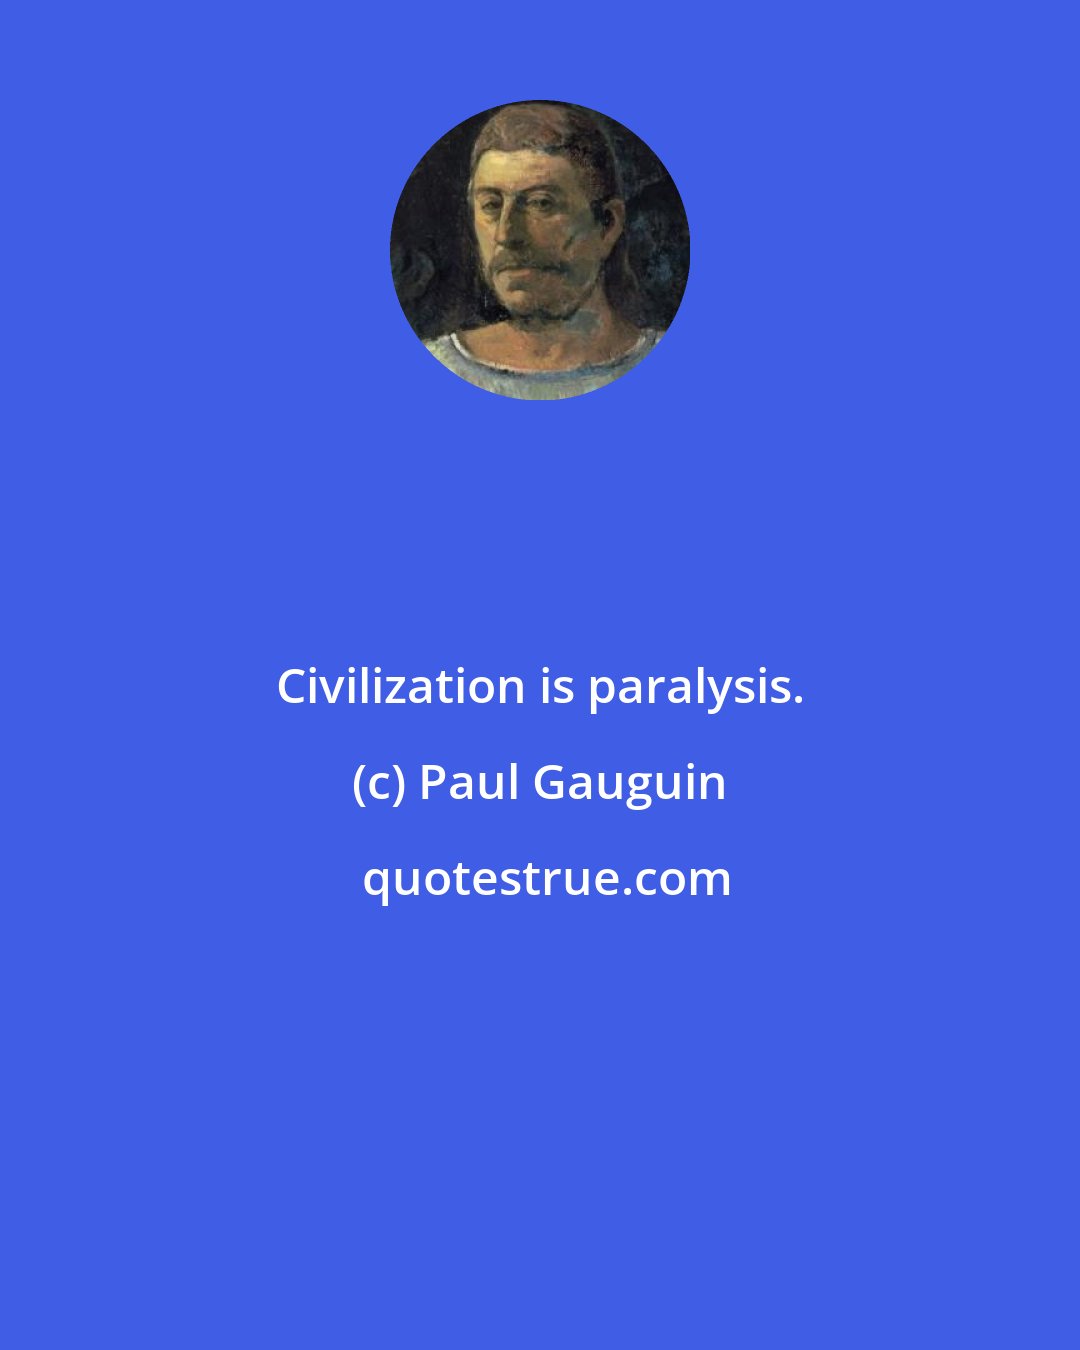 Paul Gauguin: Civilization is paralysis.